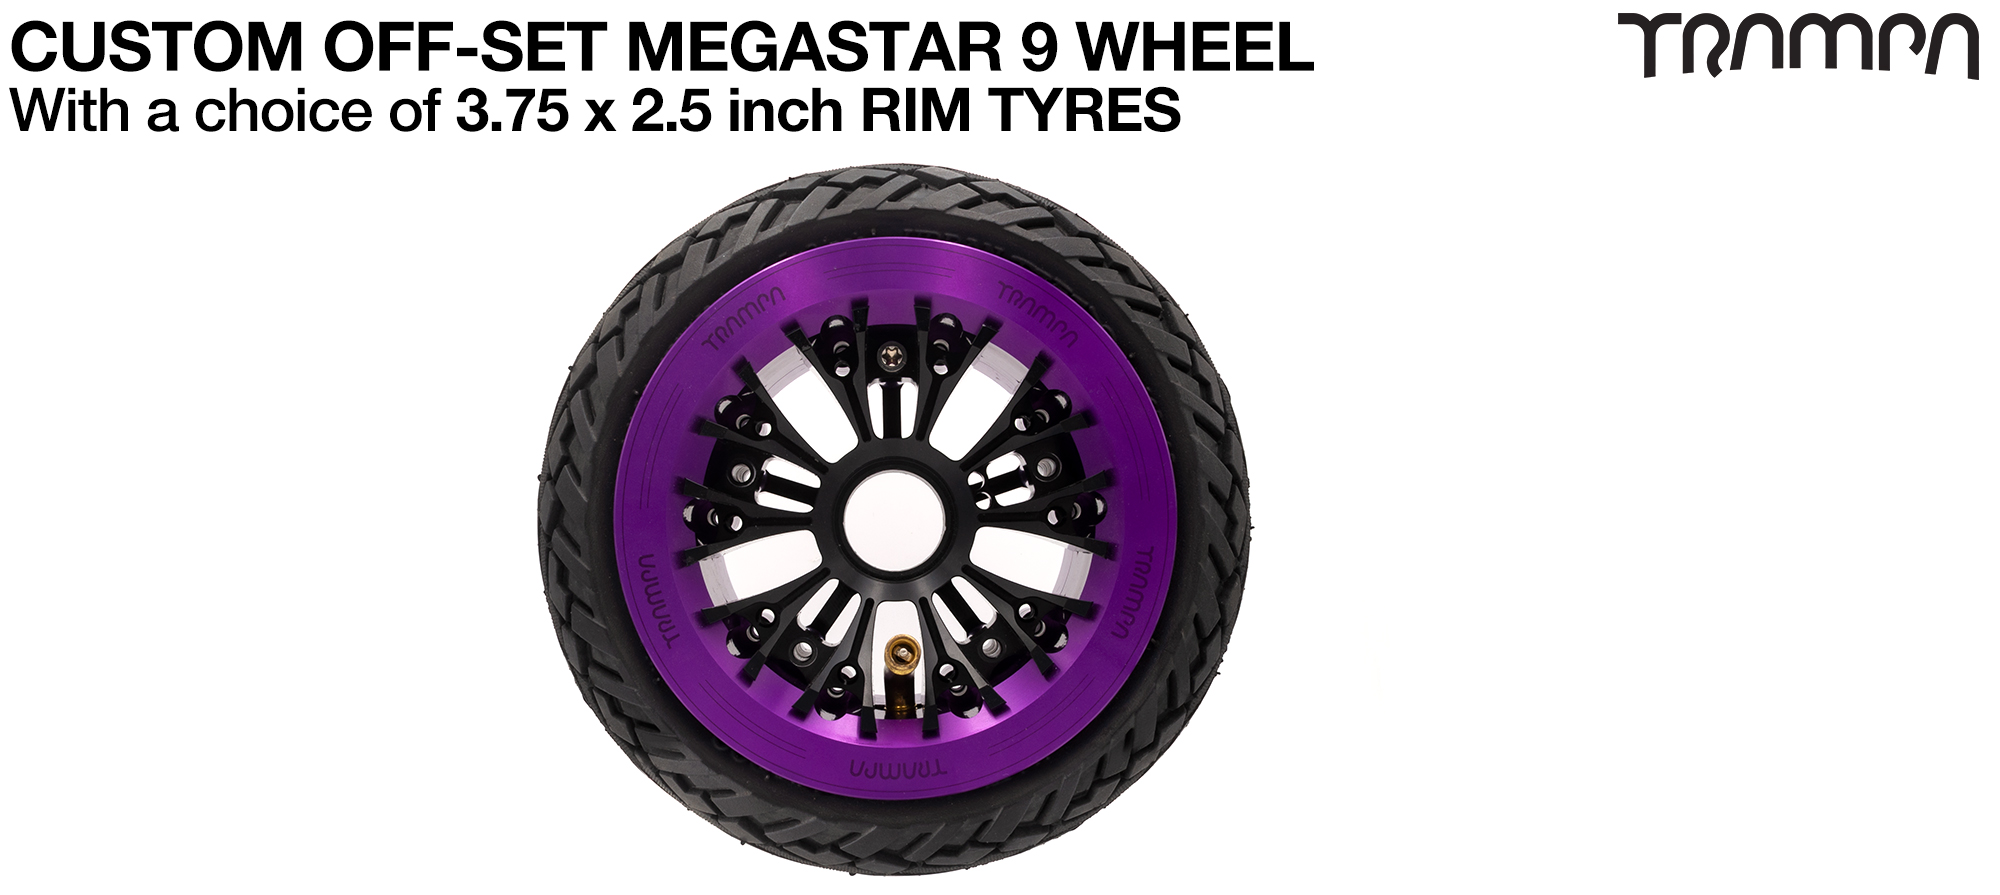 OFF-SET MEGASTAR 9 WHEEL - 6 Inch URBAN Tyres (£85)